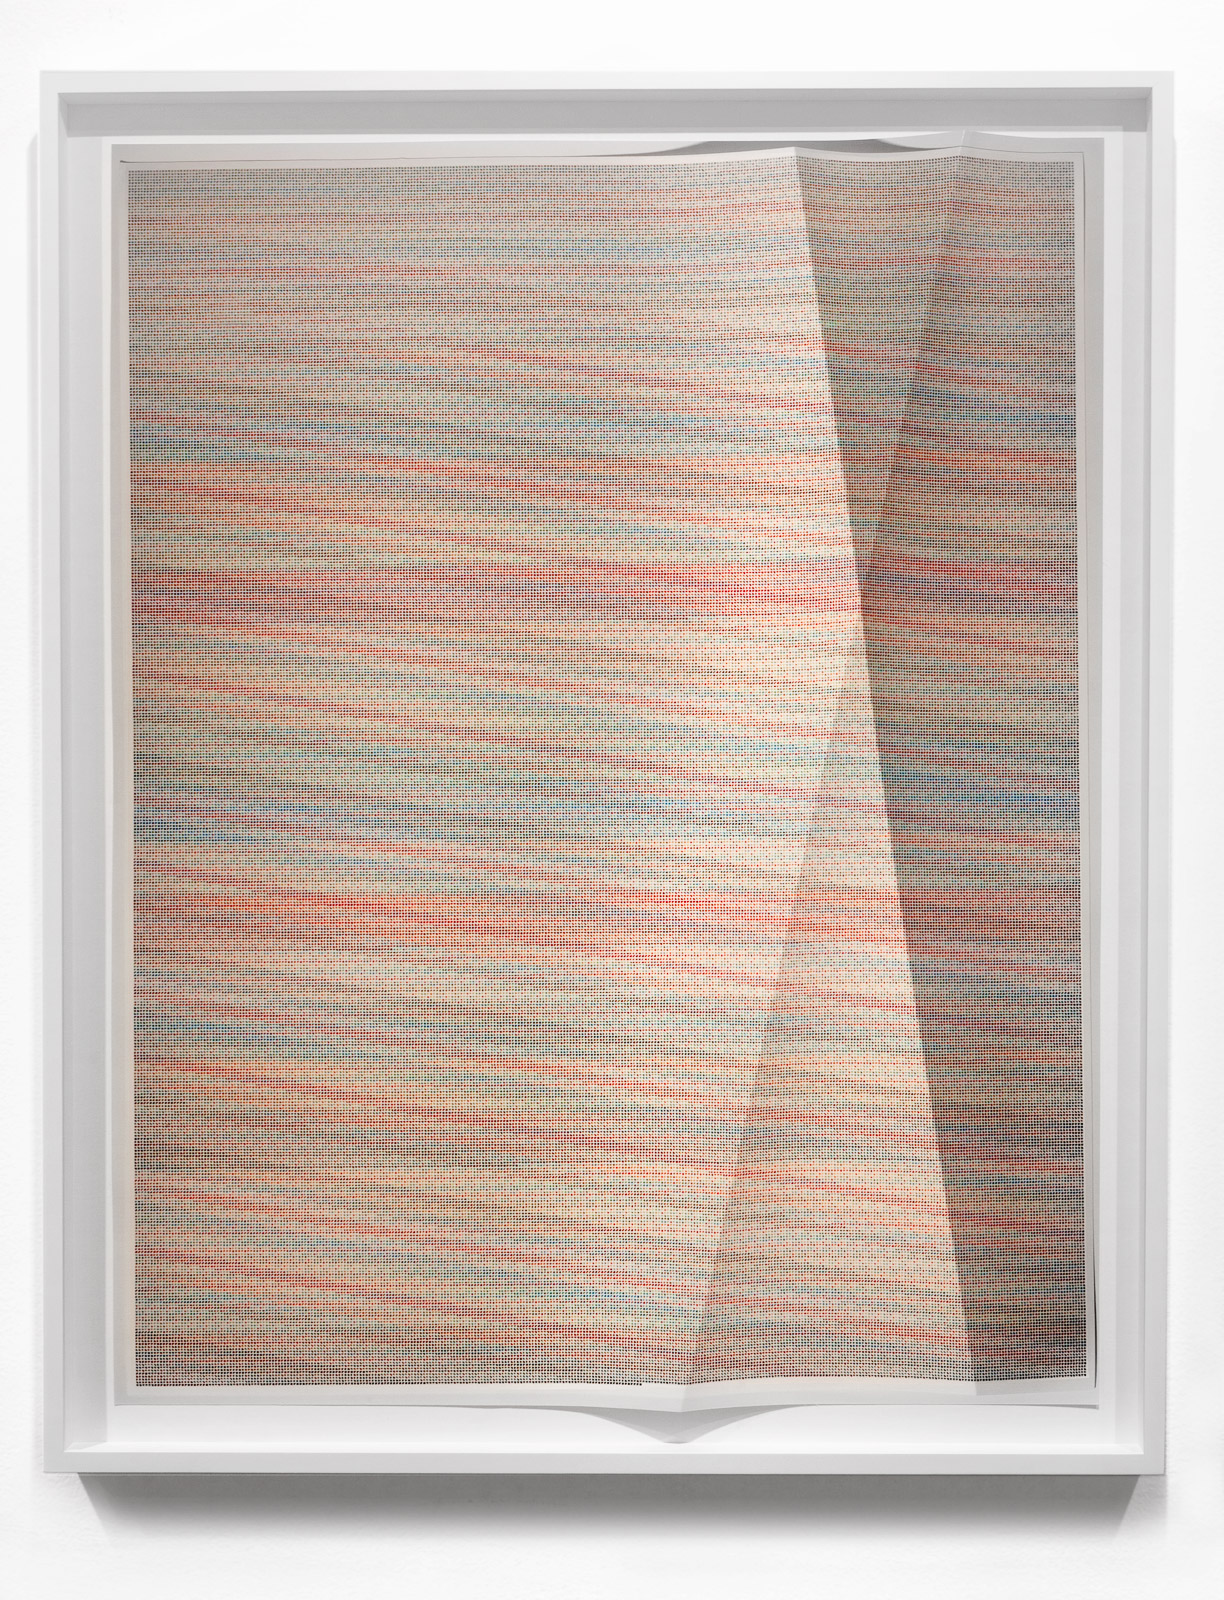 Untitled #339, 2014, Creased archival pigment print (unique), 40 x 60 inches